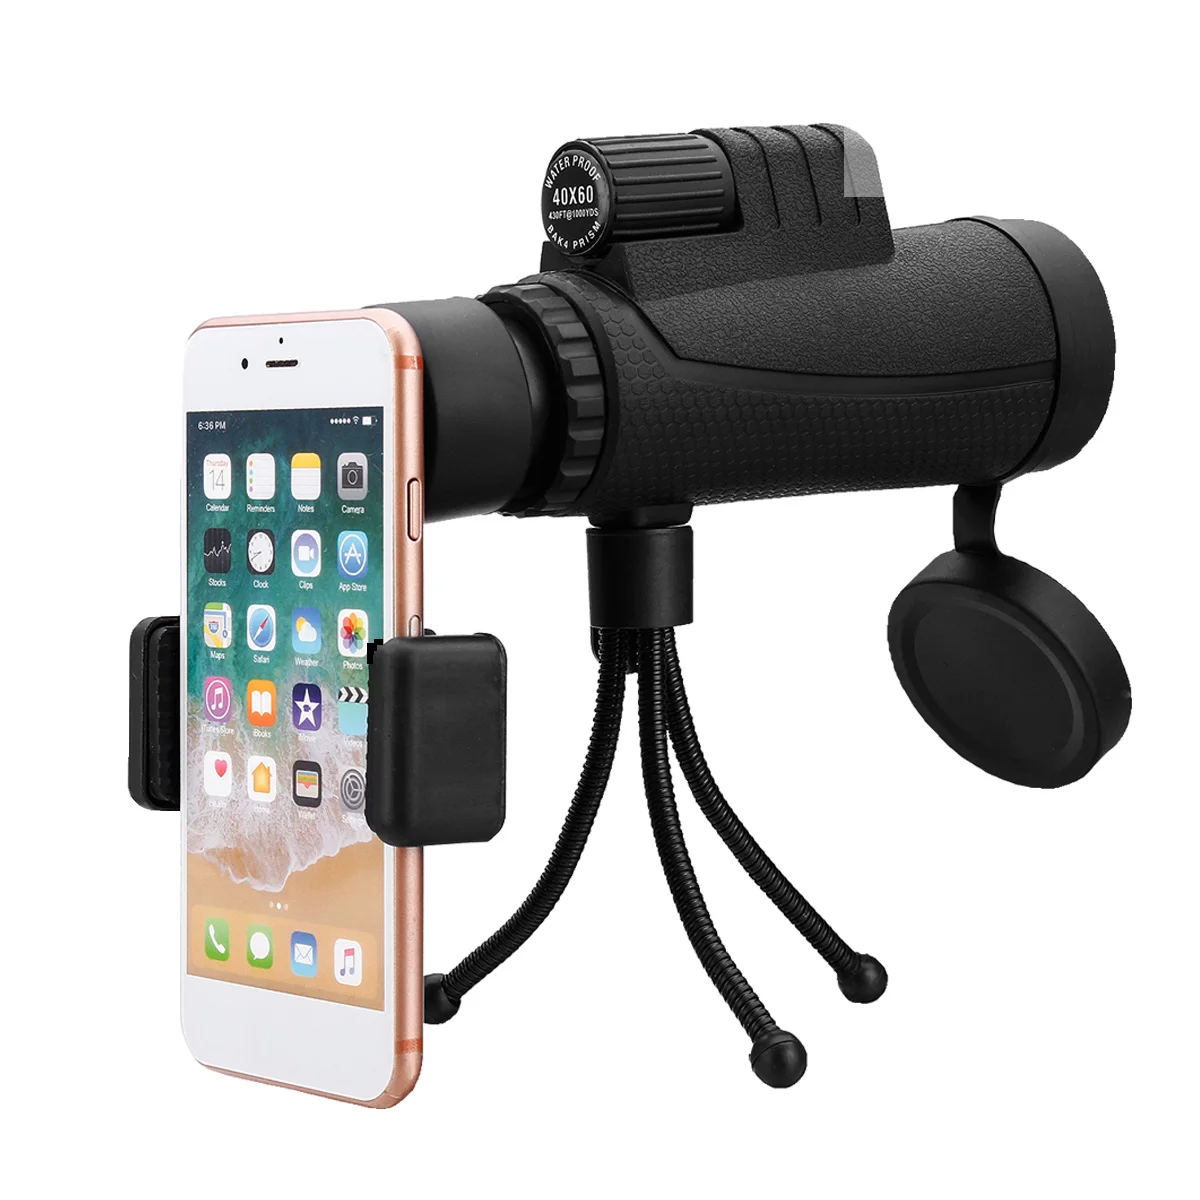 40x60 зум Монокуляр HD телескоп Охота ночное видение телеобъектив камеры+ держатель телефона+ Штатив для iPhone 6 7 8 X XR